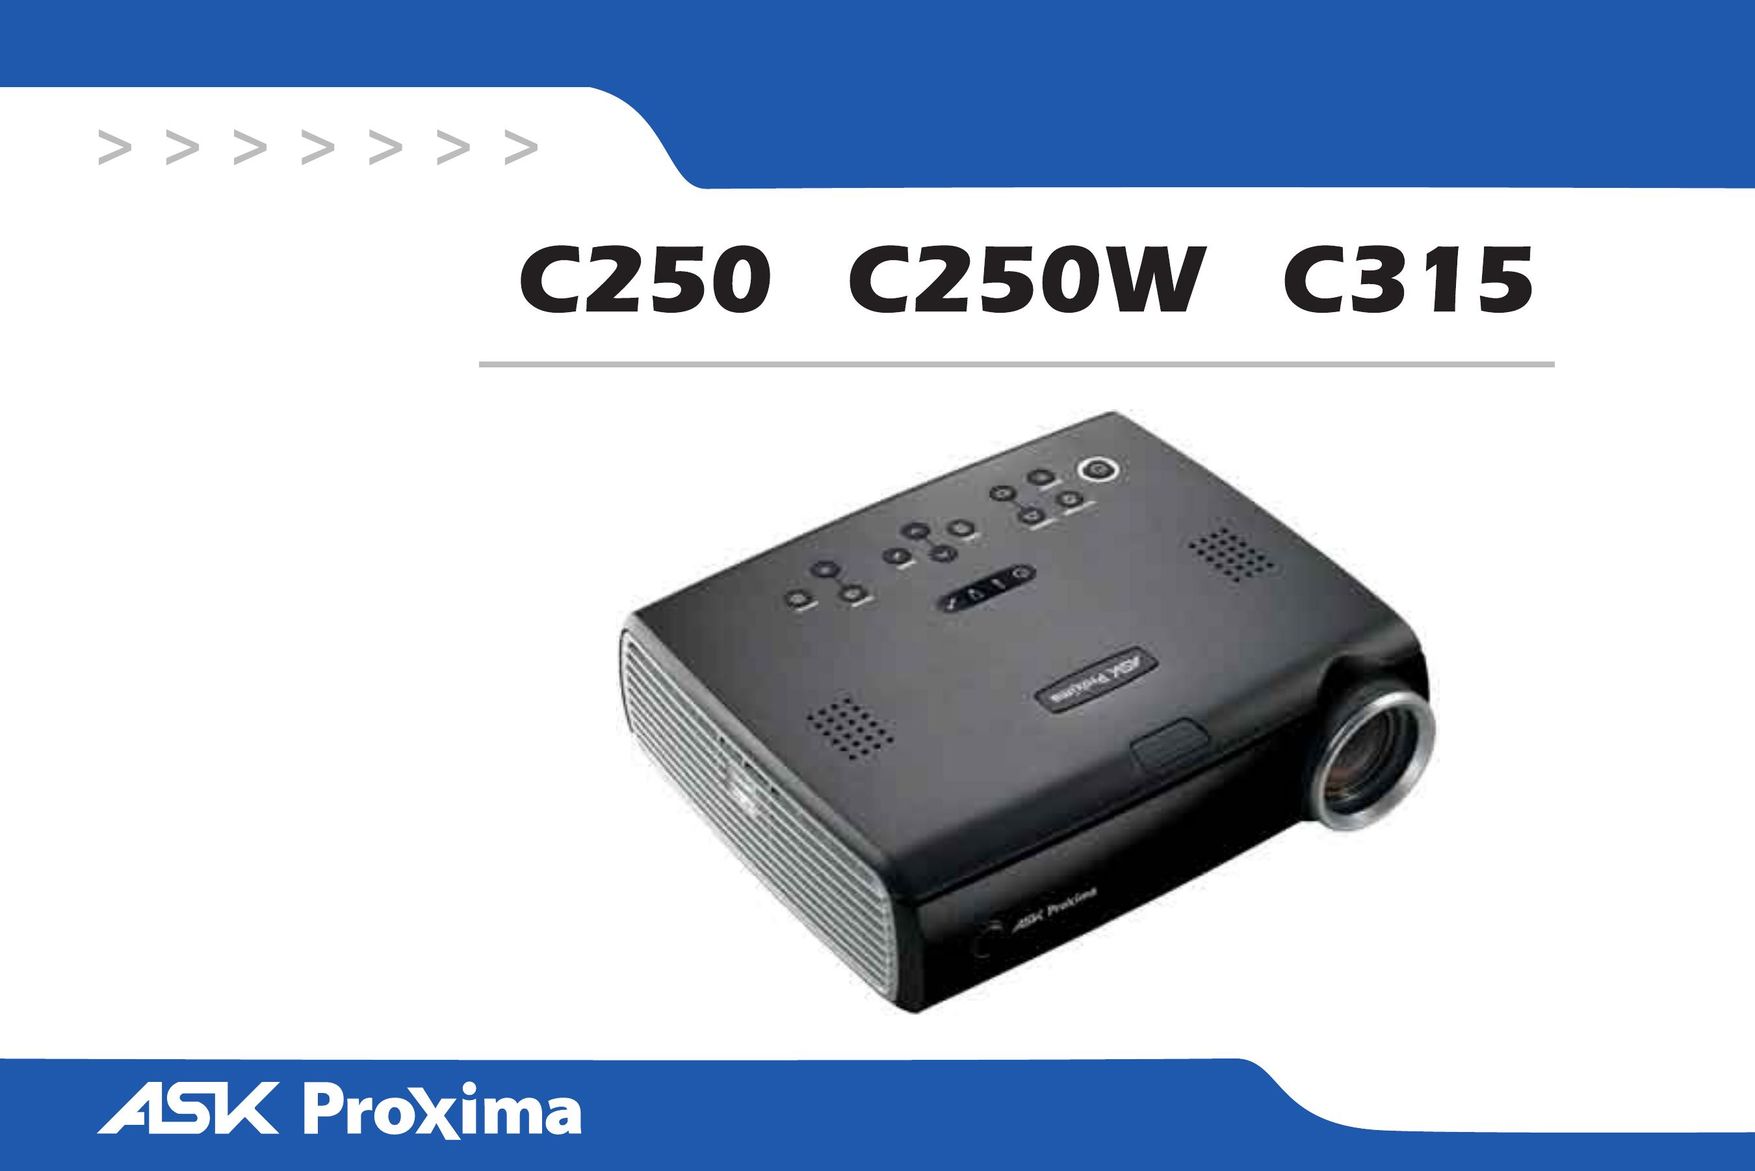 Ask Proxima C315 Projector User Manual